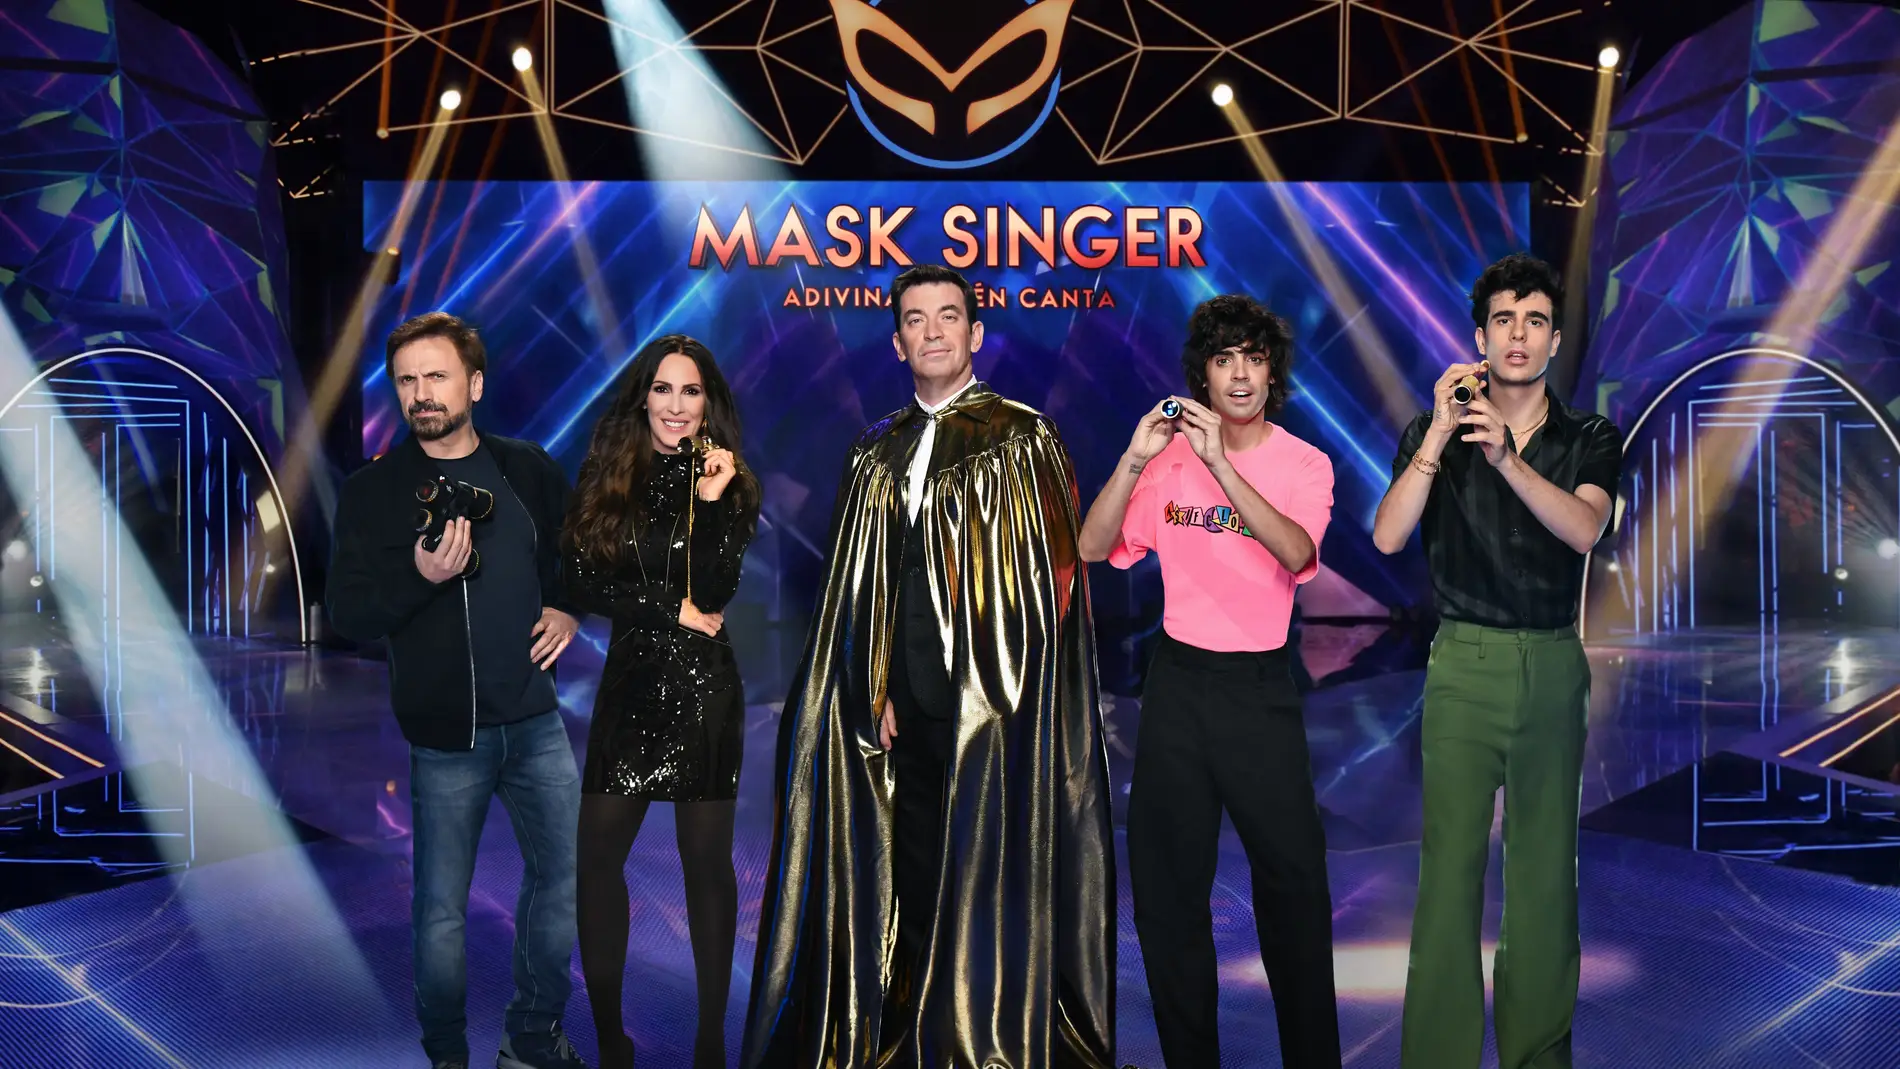 ‘Mask Singer: adivina quién canta’ title=